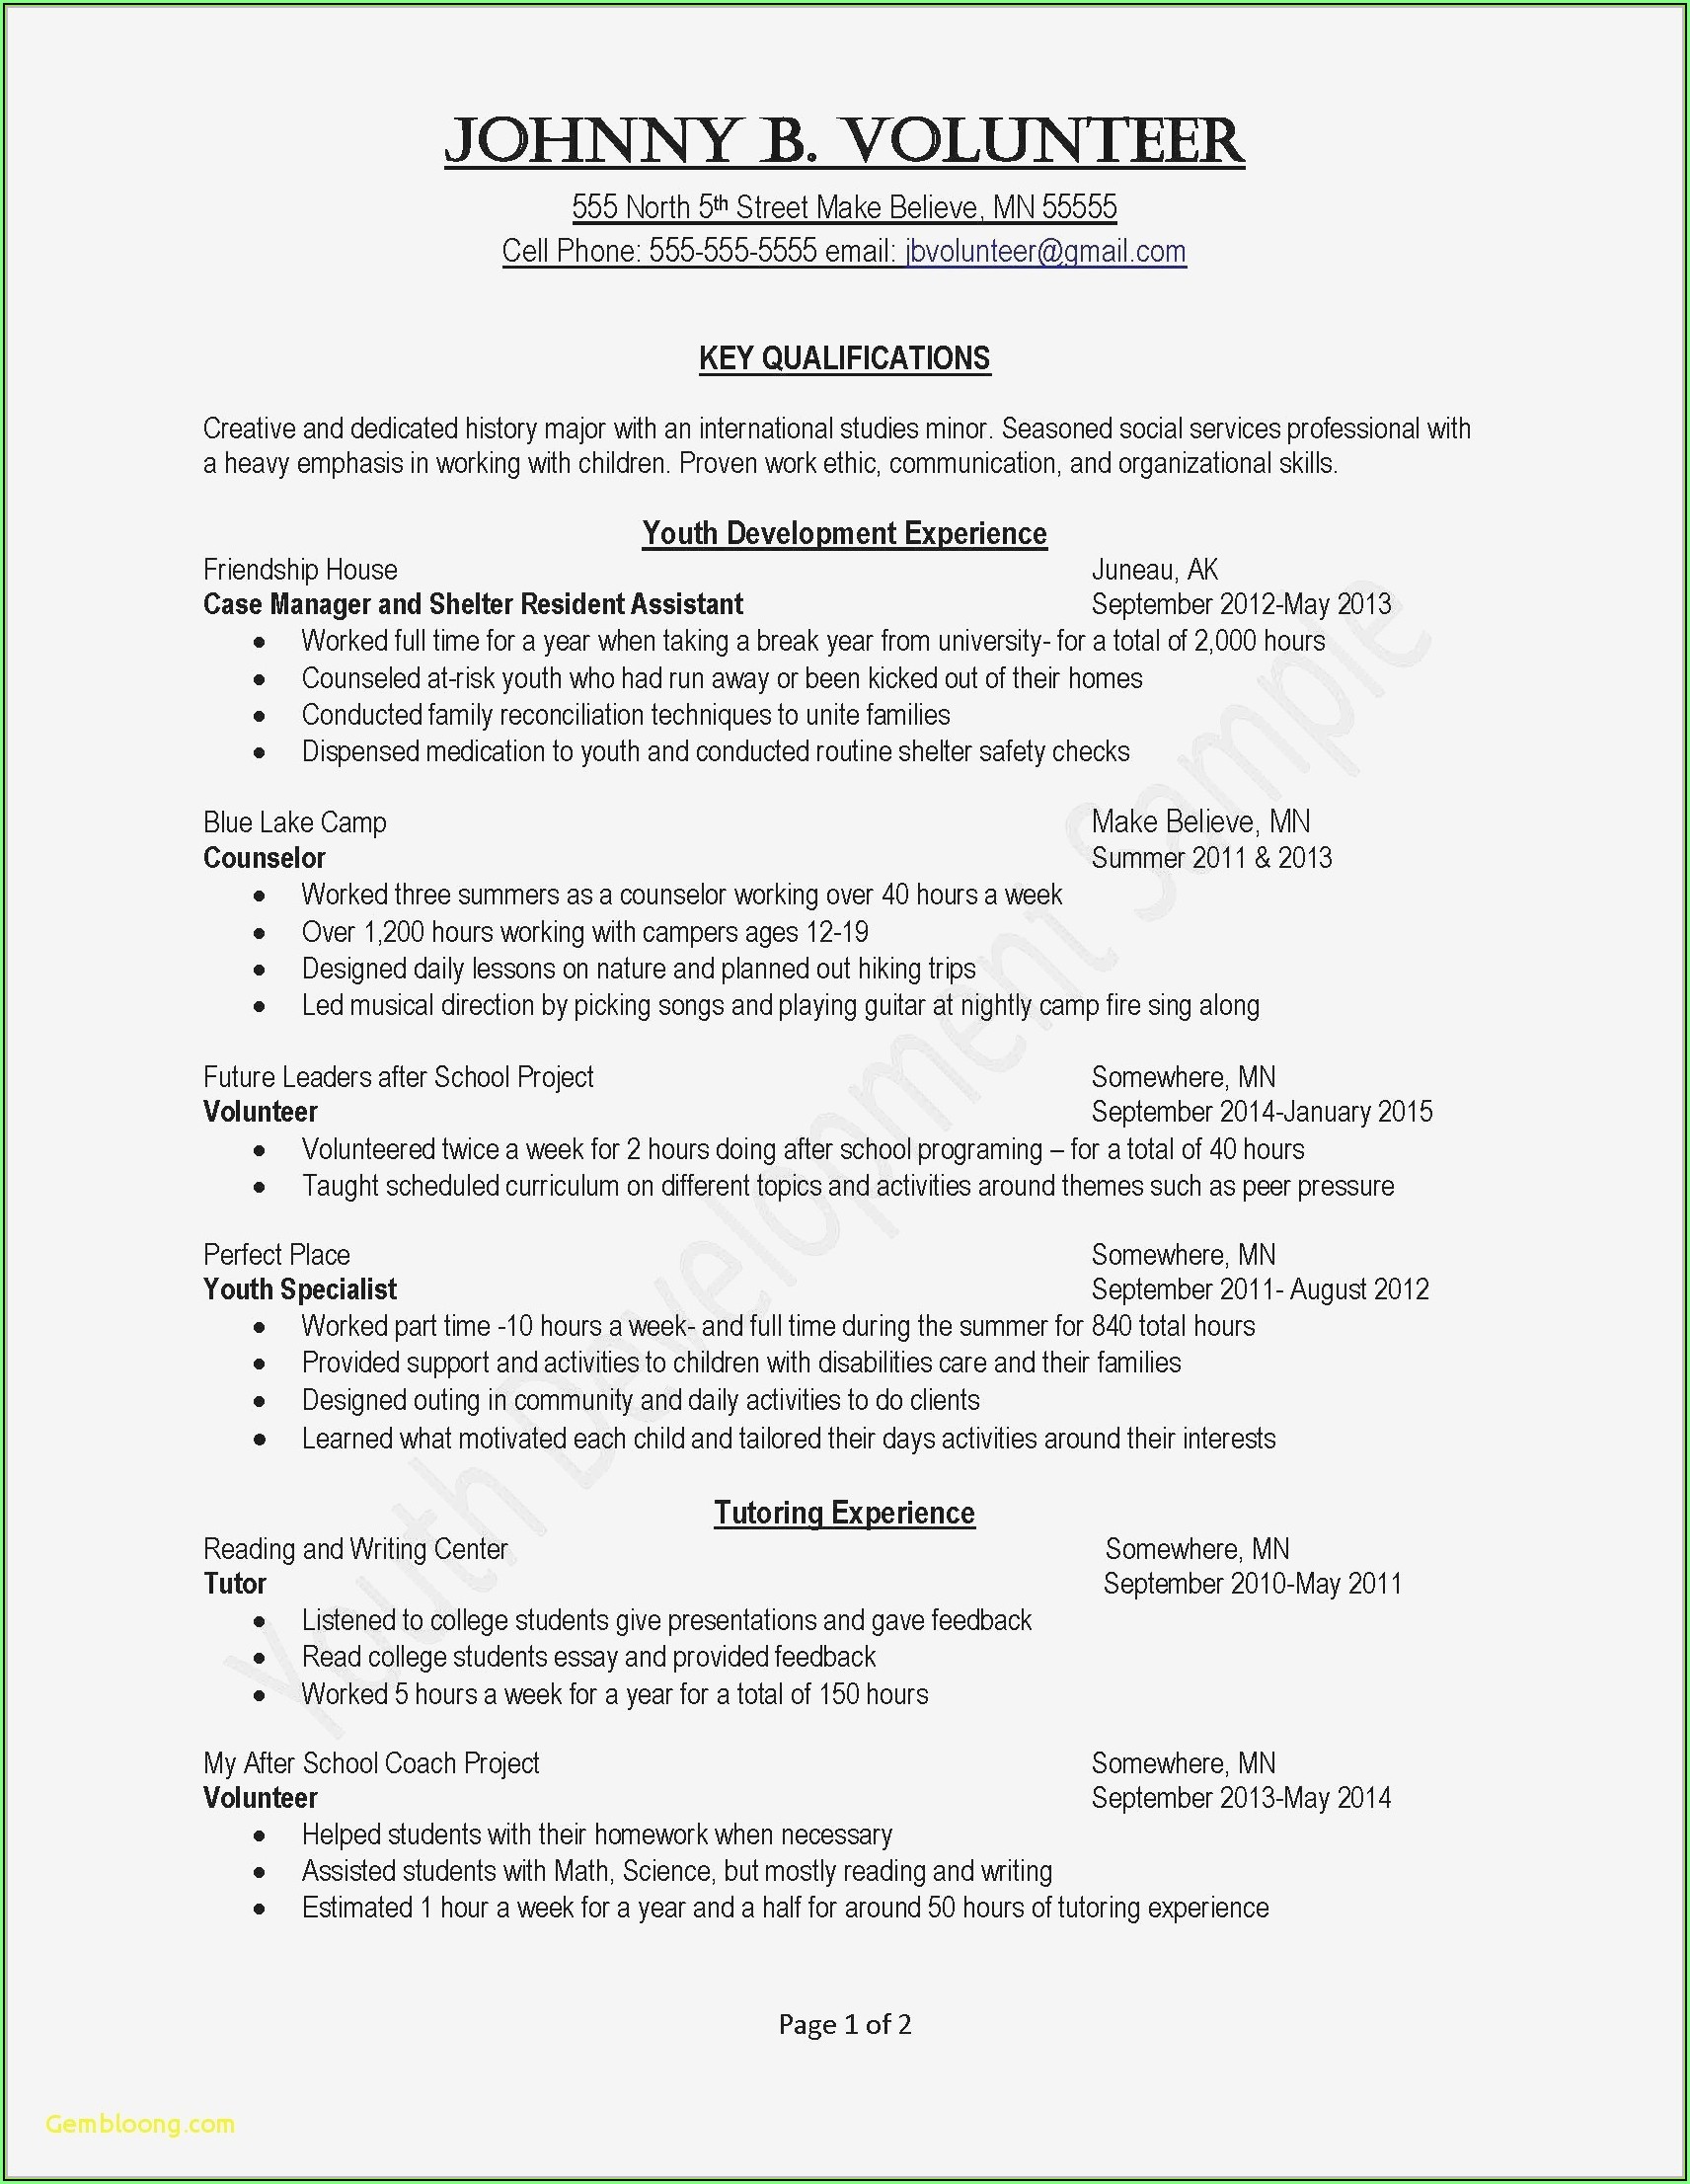 Free Resume Templates To Print